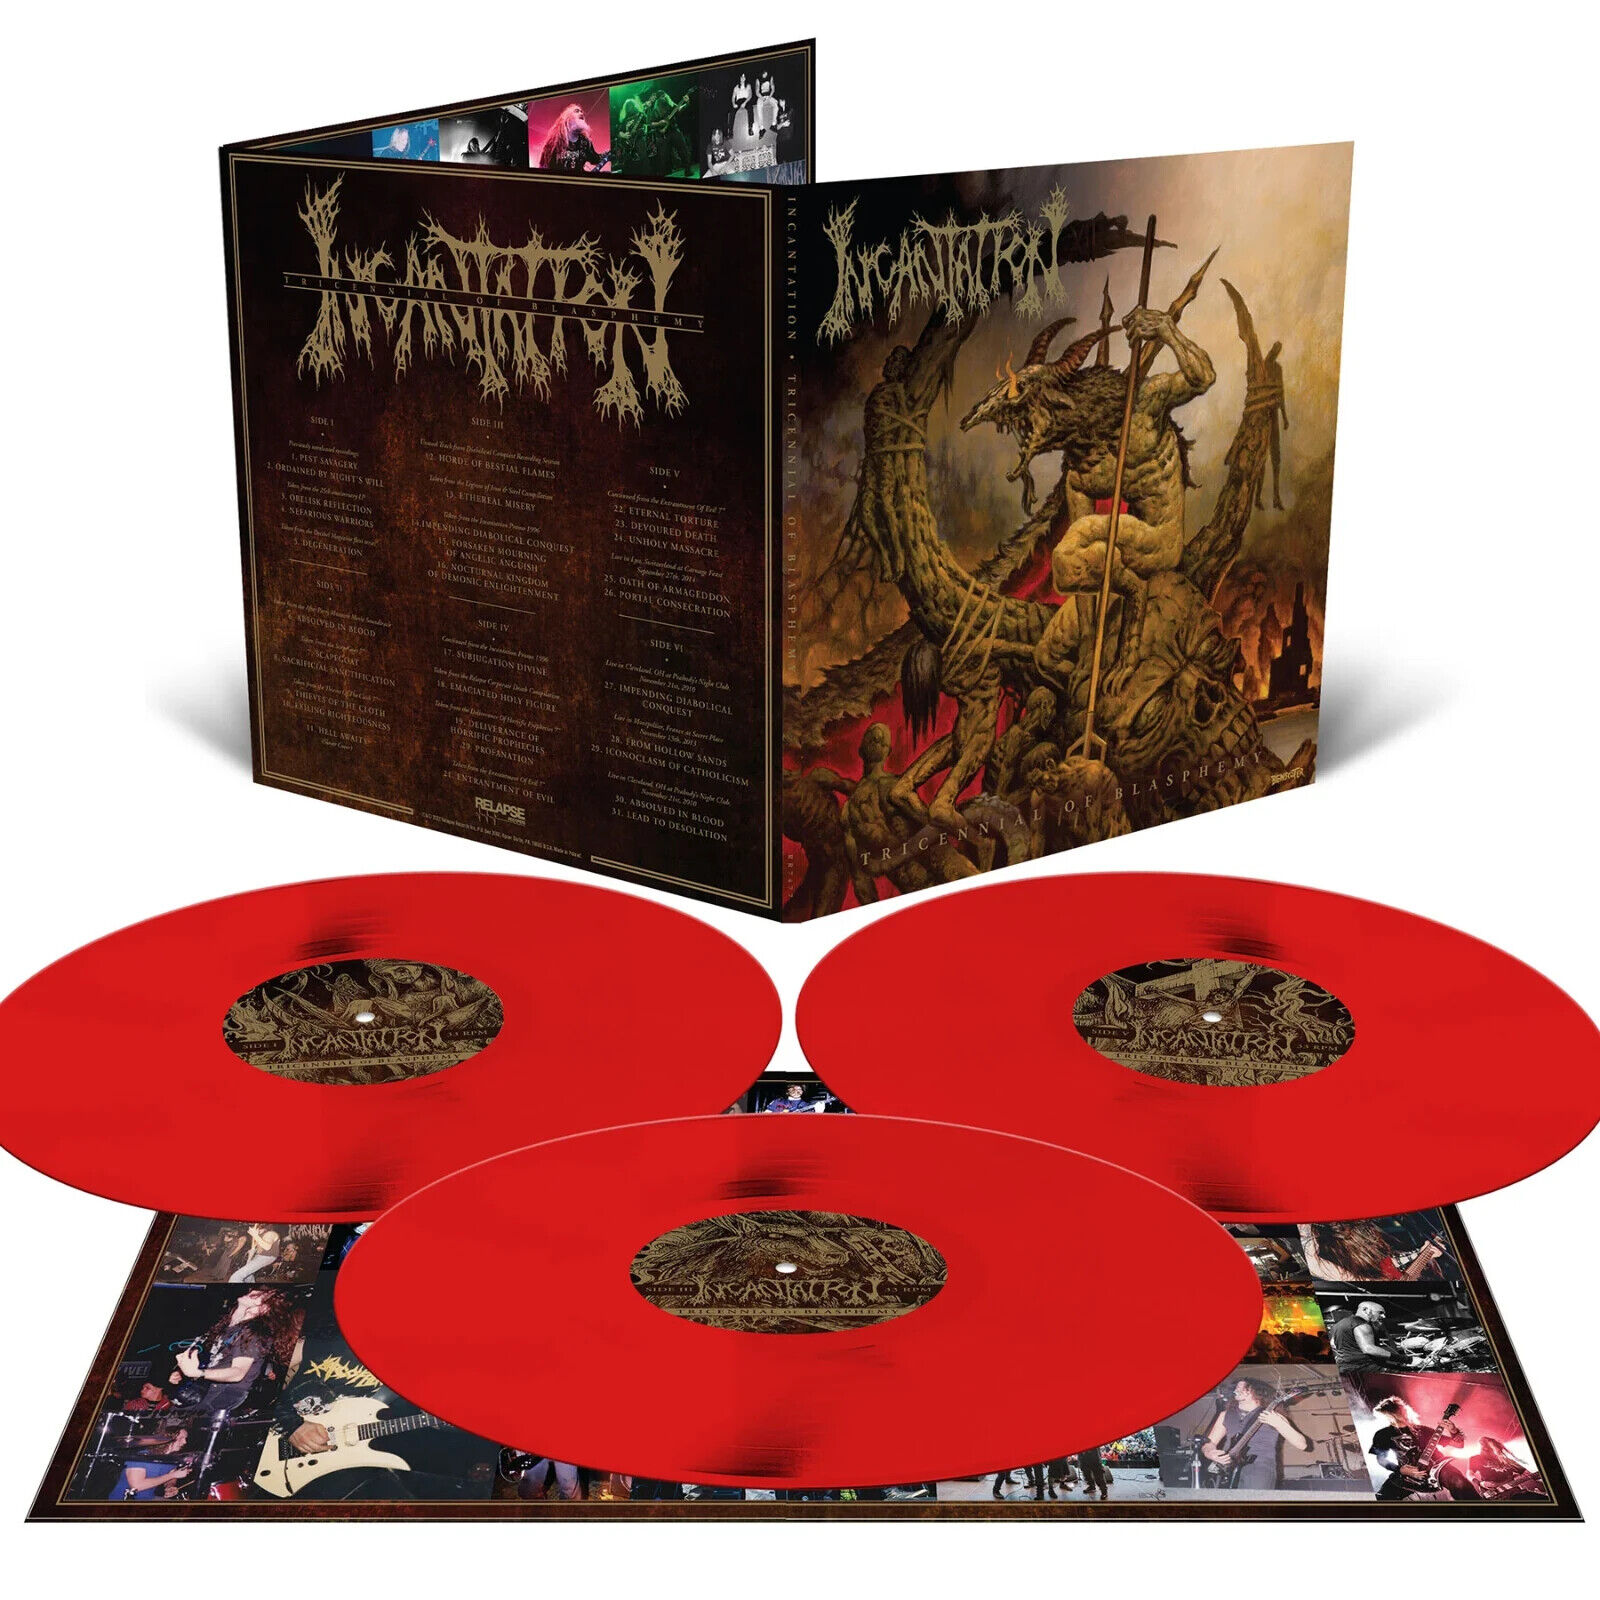 Incantation ‎- Tricennial Of Blasphemy 3 LP COLORED Vinyl Death Metal NEW Record